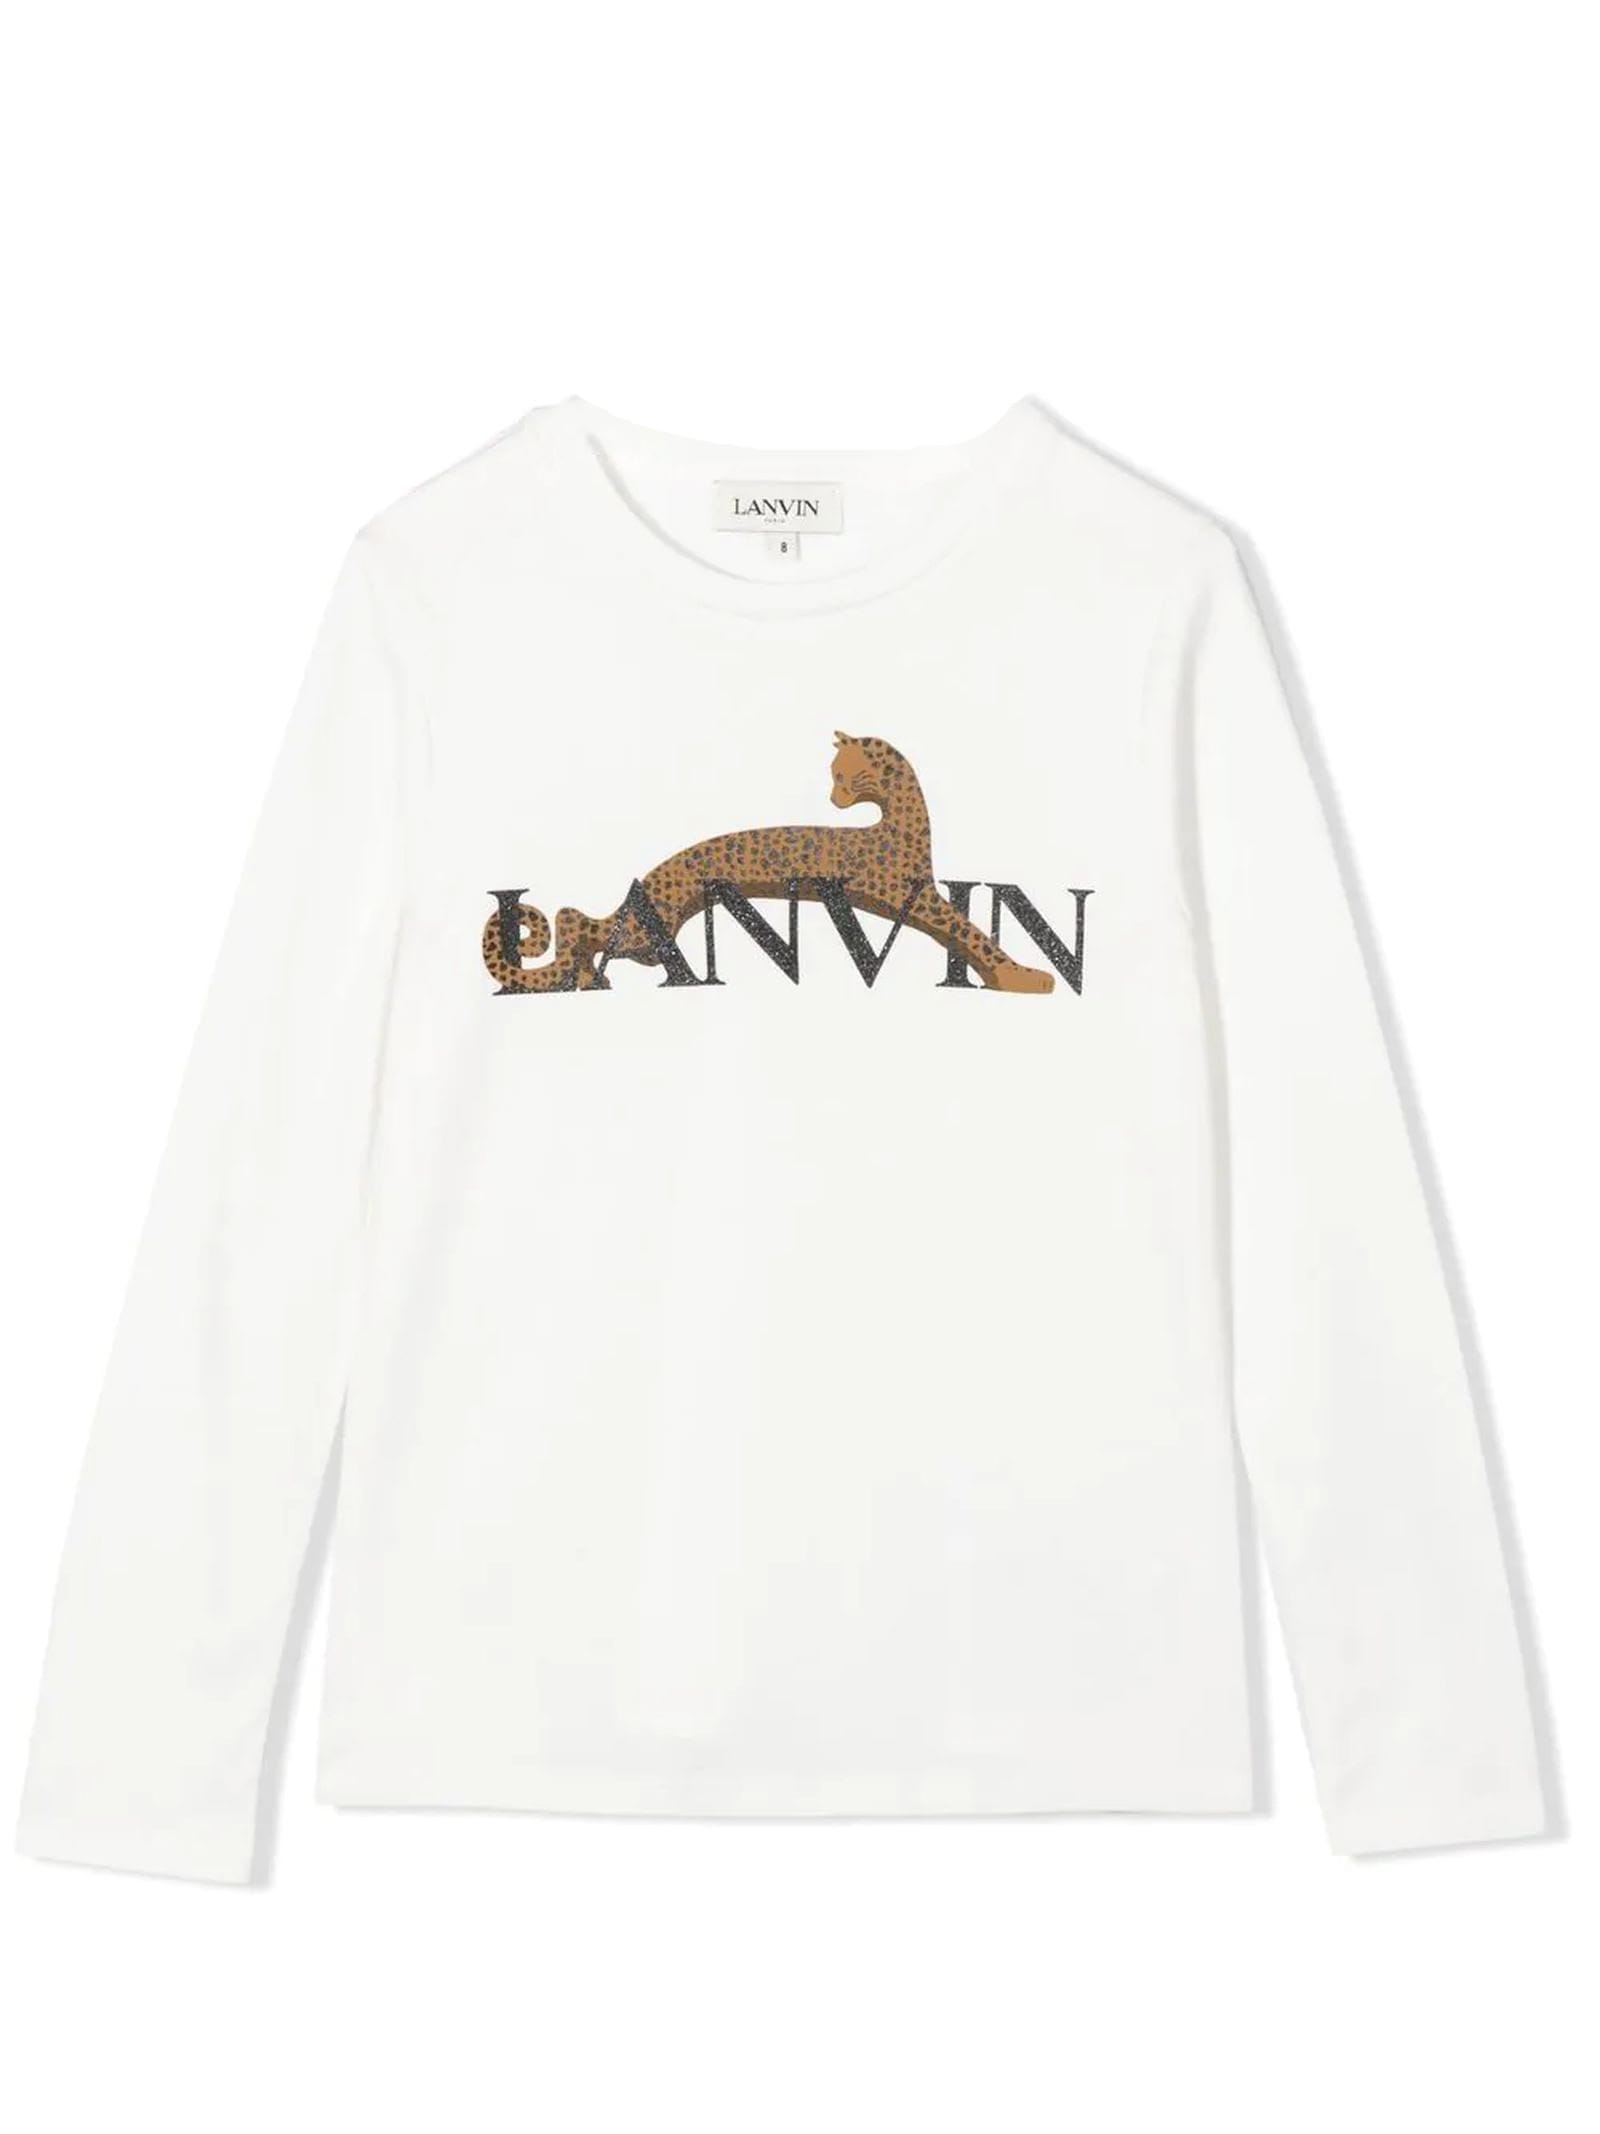 Lanvin White Cotton Tshirt